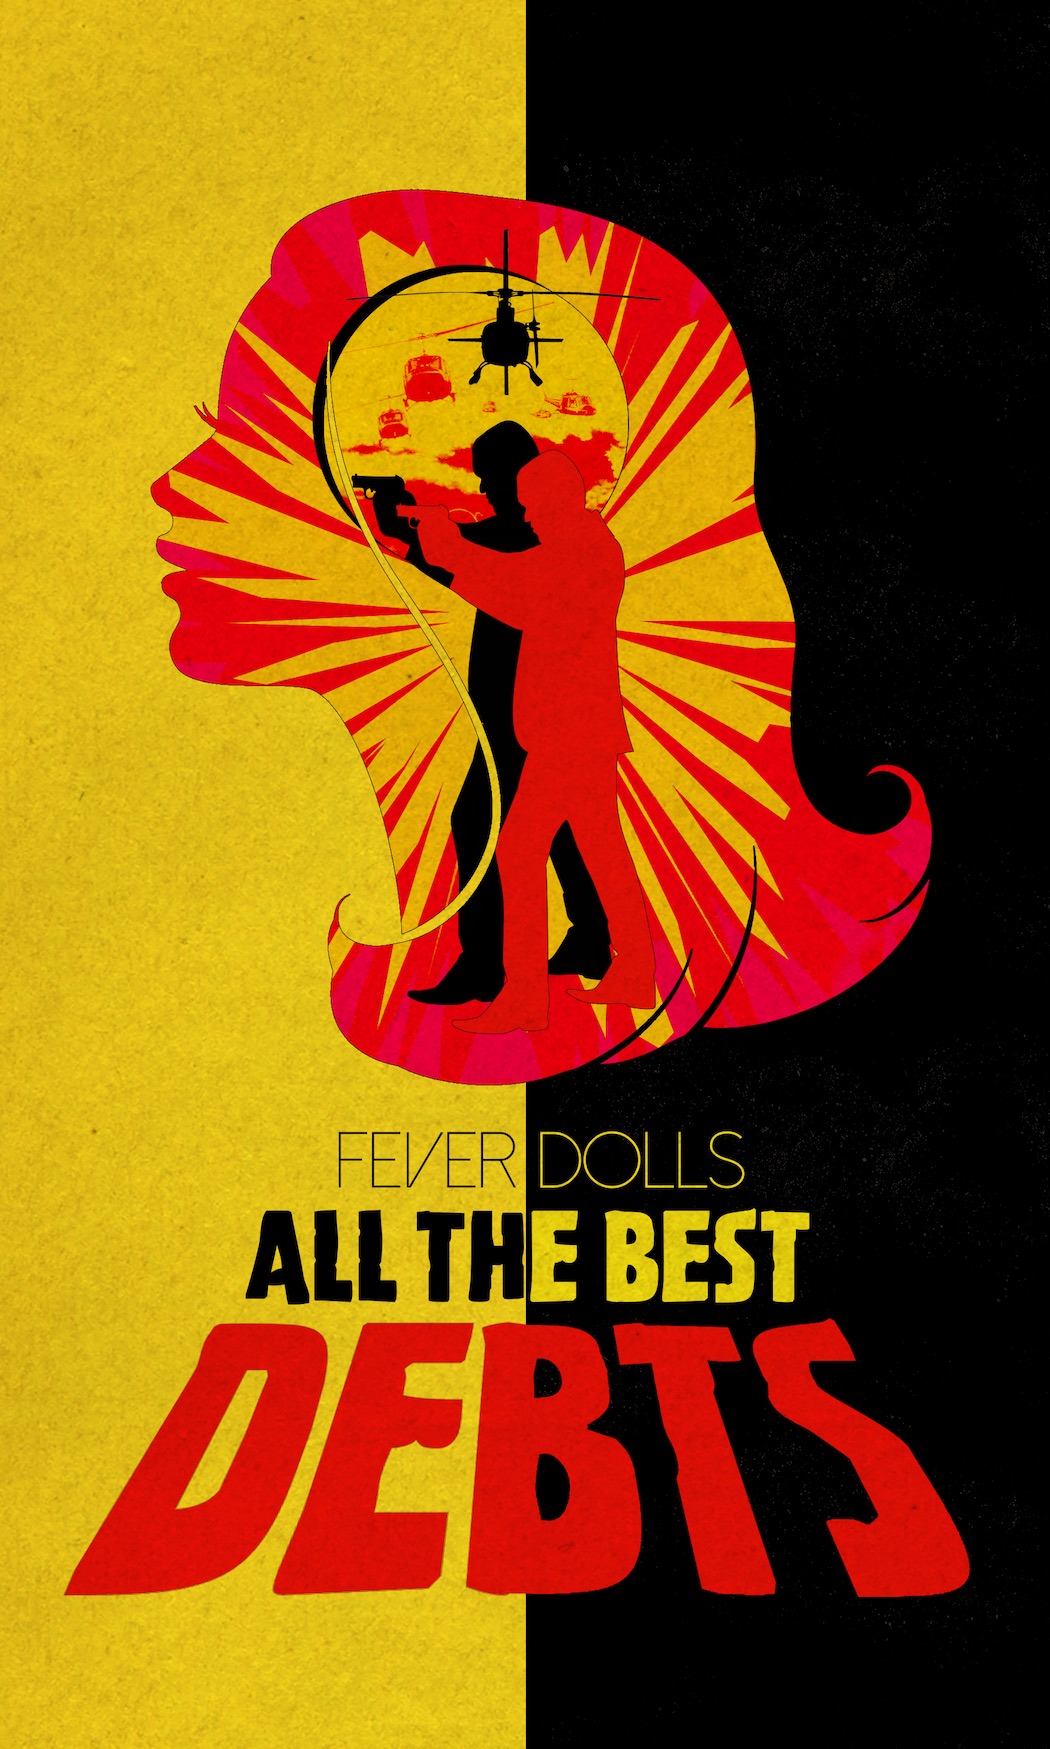 Fever Dolls' "All the Best Debts' poster